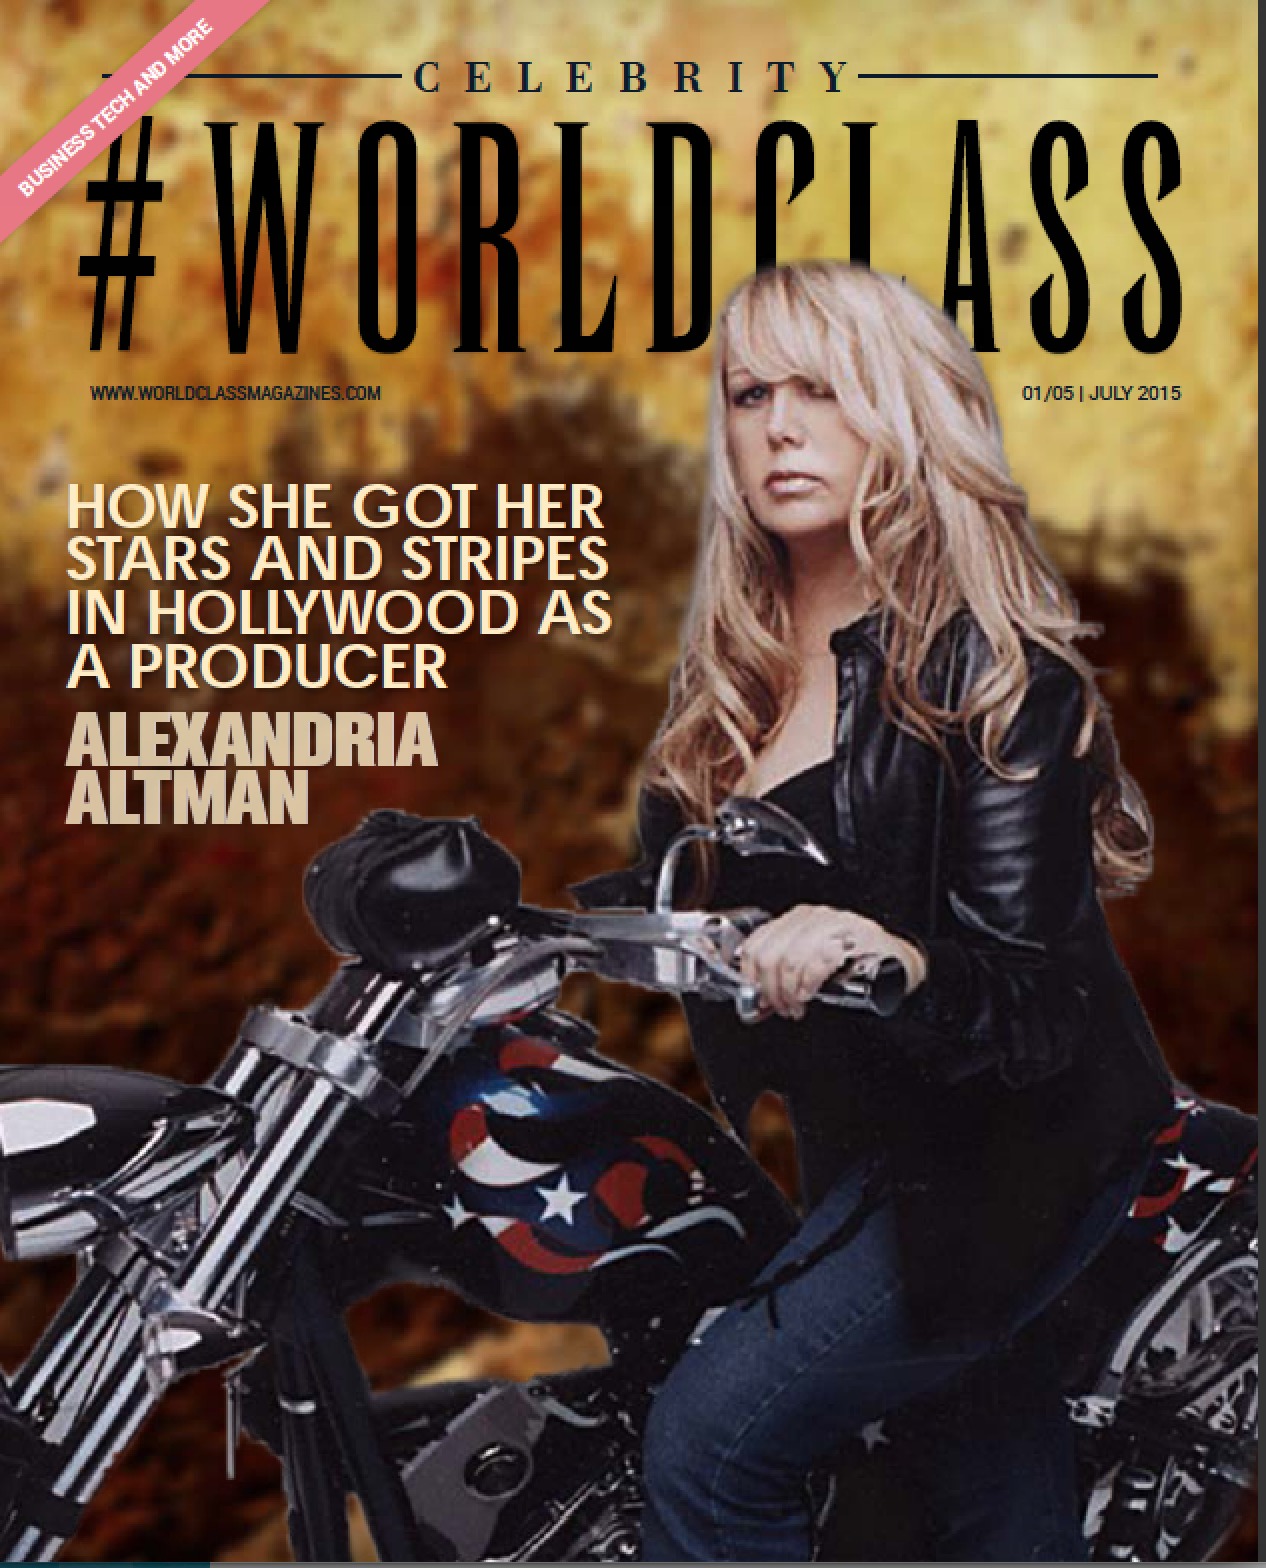 Celebrity World Class Magazine Alexandria Altman -July 2015 issue